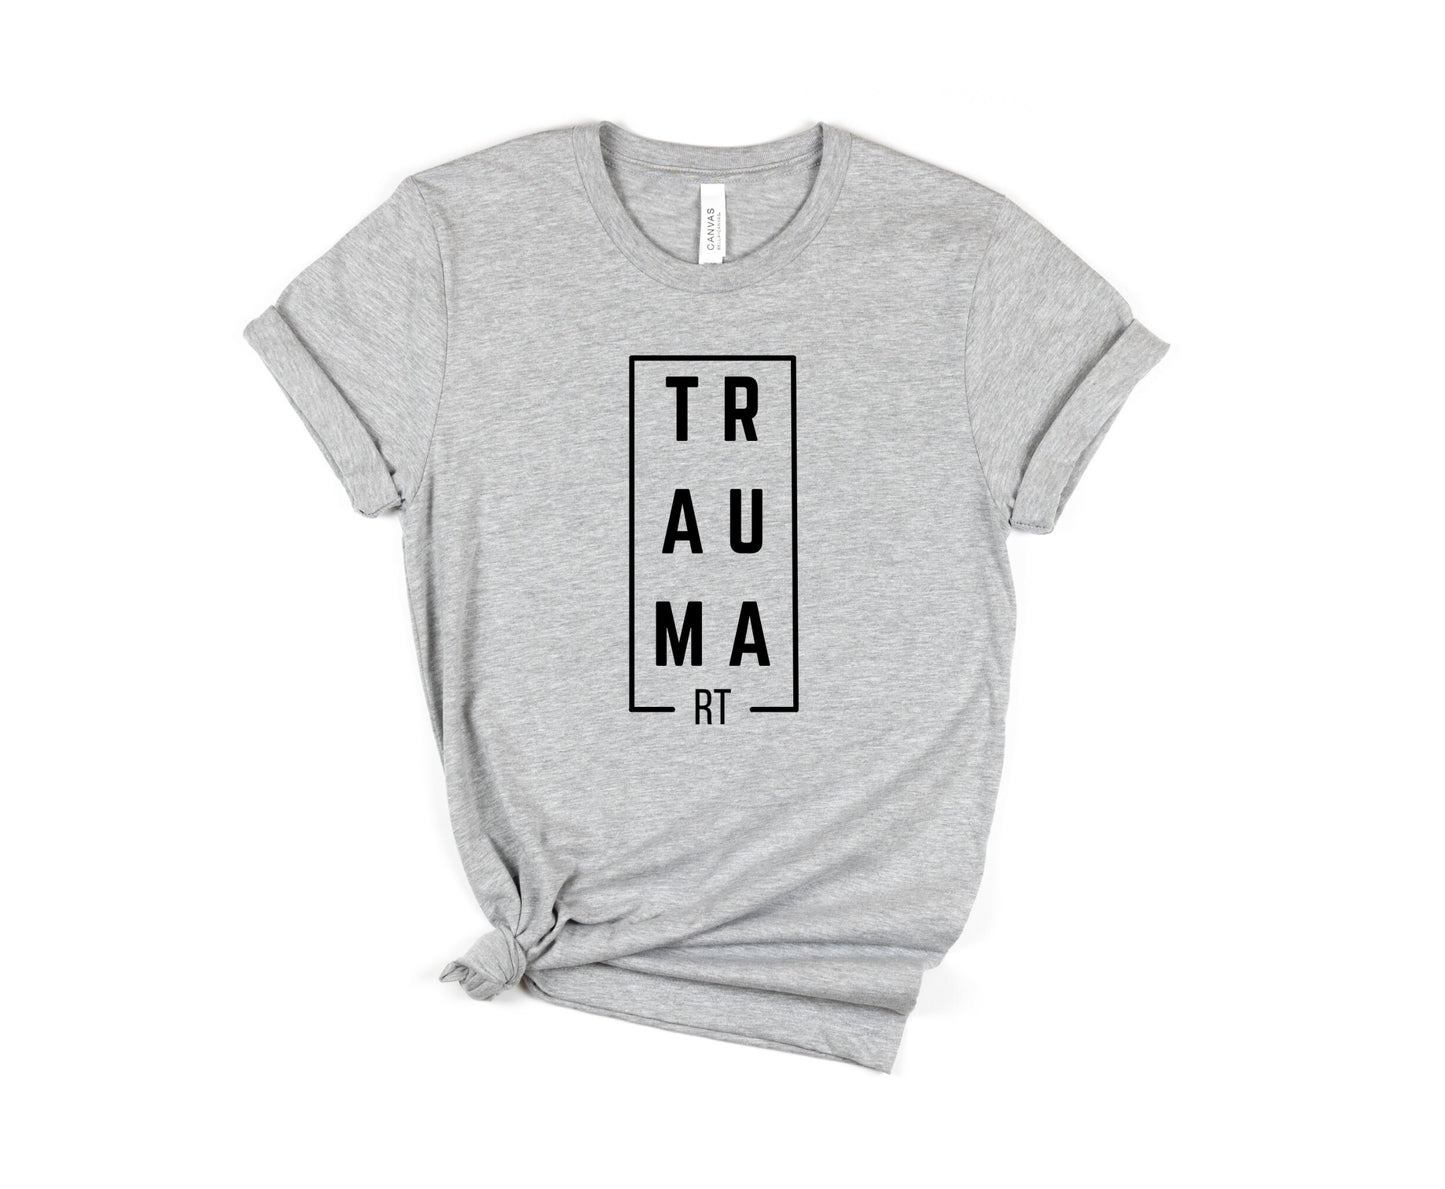 Trauma RT Shirt, Respiratory Shirt, Trauma ICU, Respiratory Gift